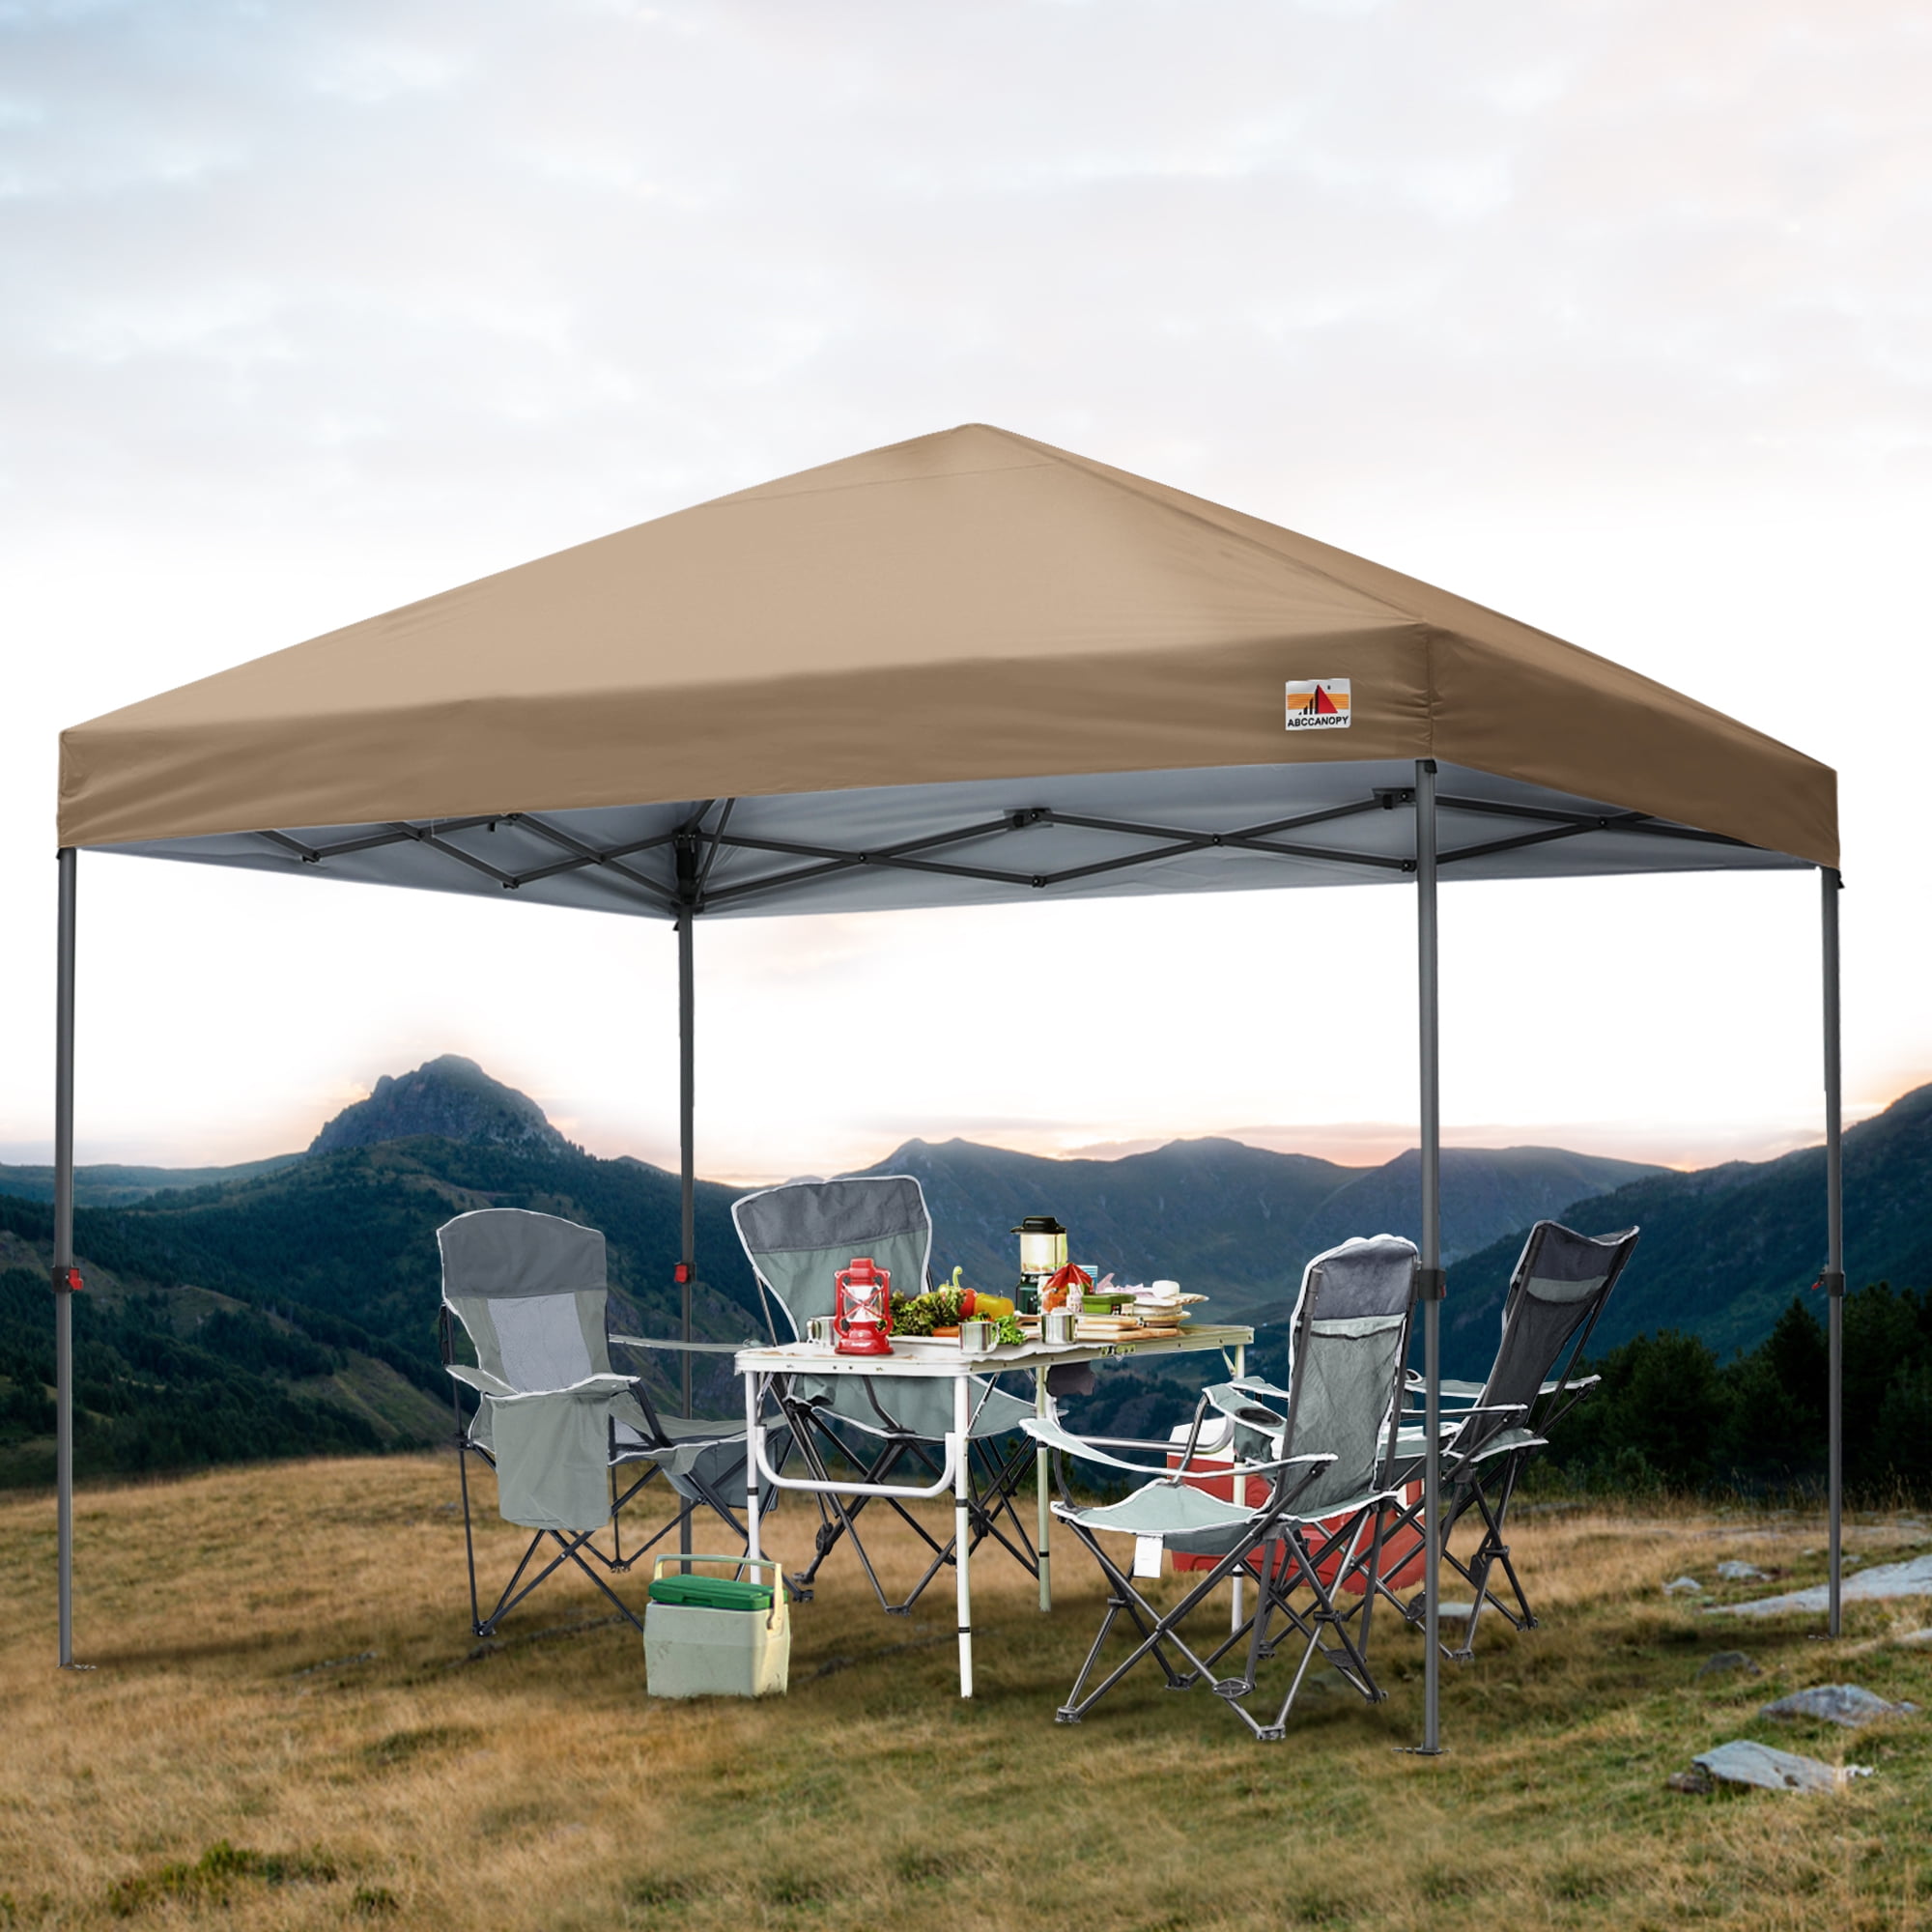 Khaki ABCCANOPY Durable Easy Pop up Canopy Tent 8x8 